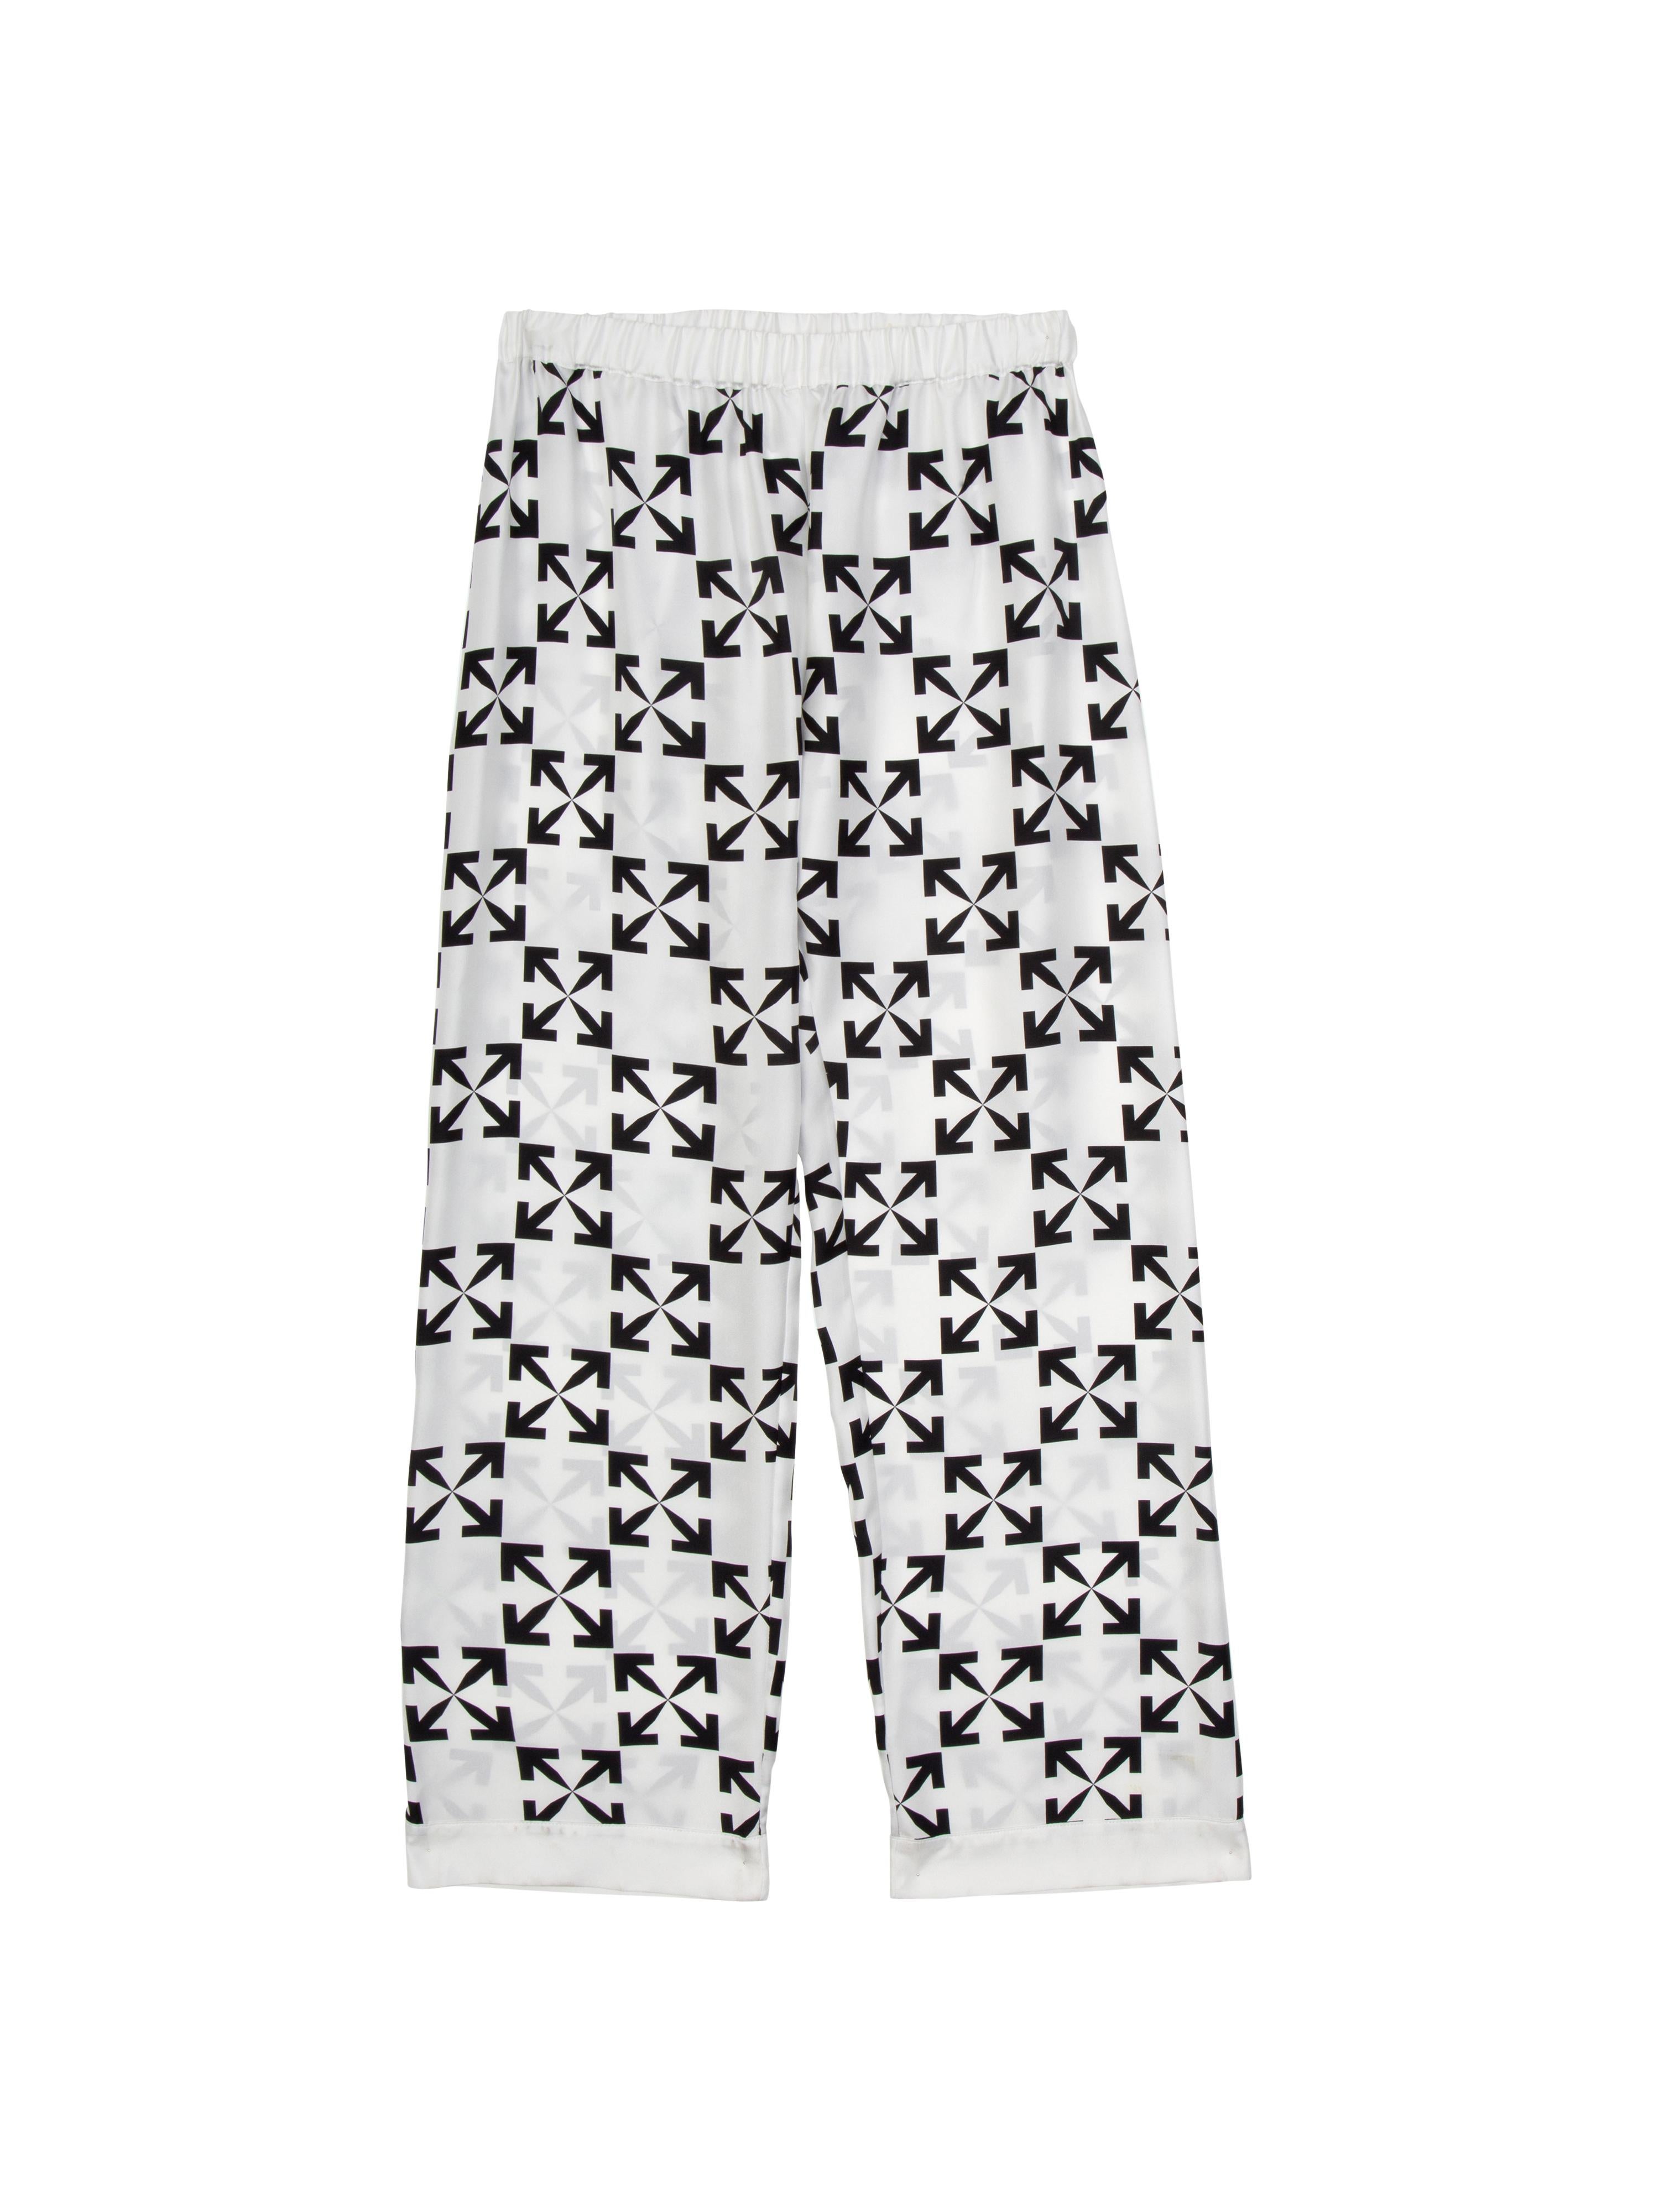 Italian Off-White Arrow Pattern Pijama White Black Large For Sale